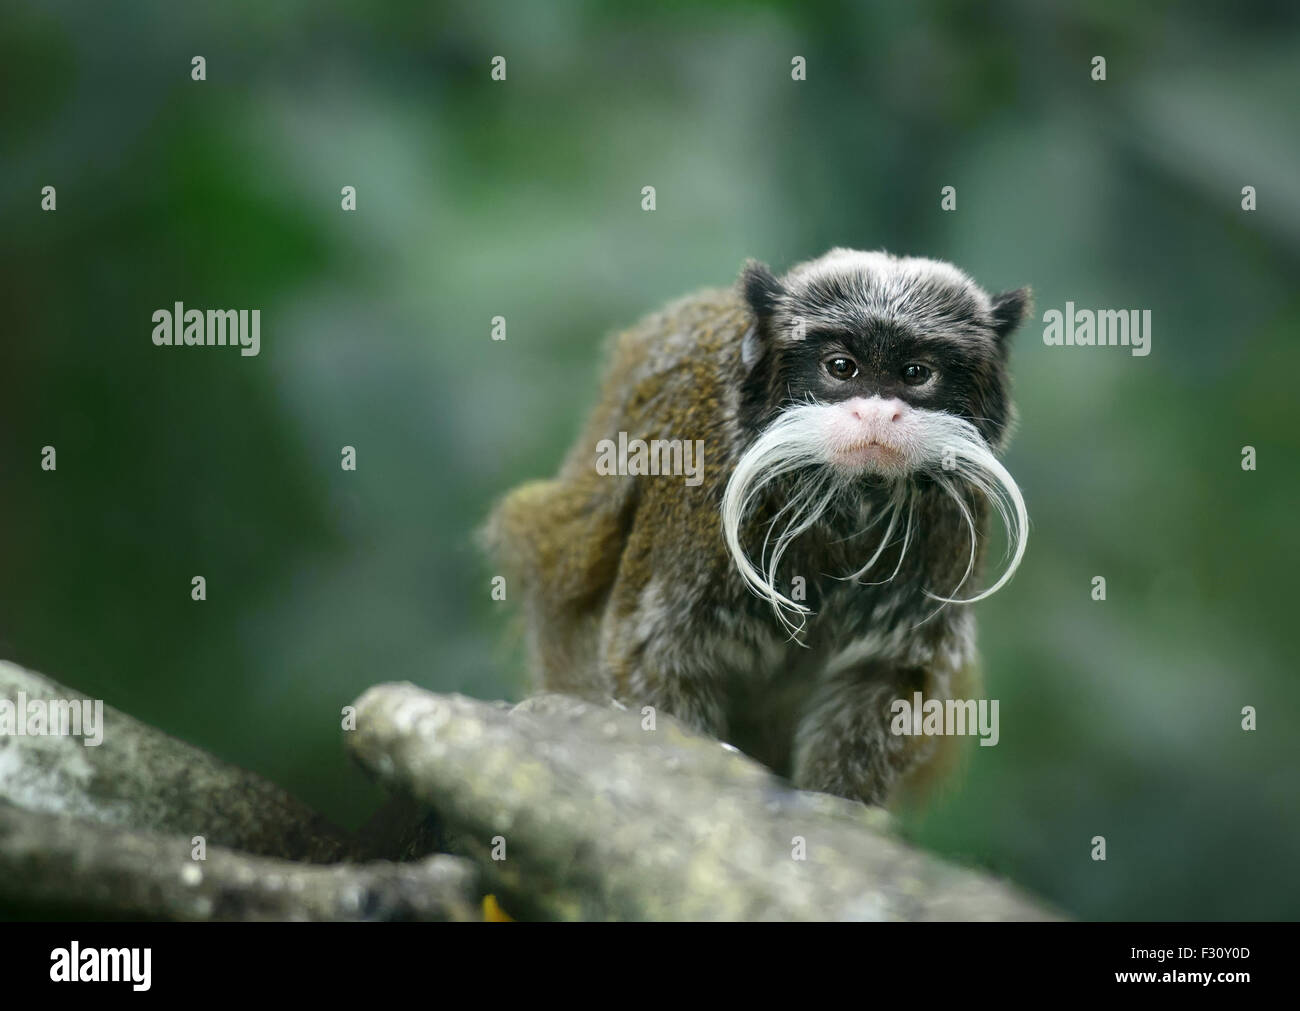 Emperor tamarin monkey with funny mustache Stock Photo